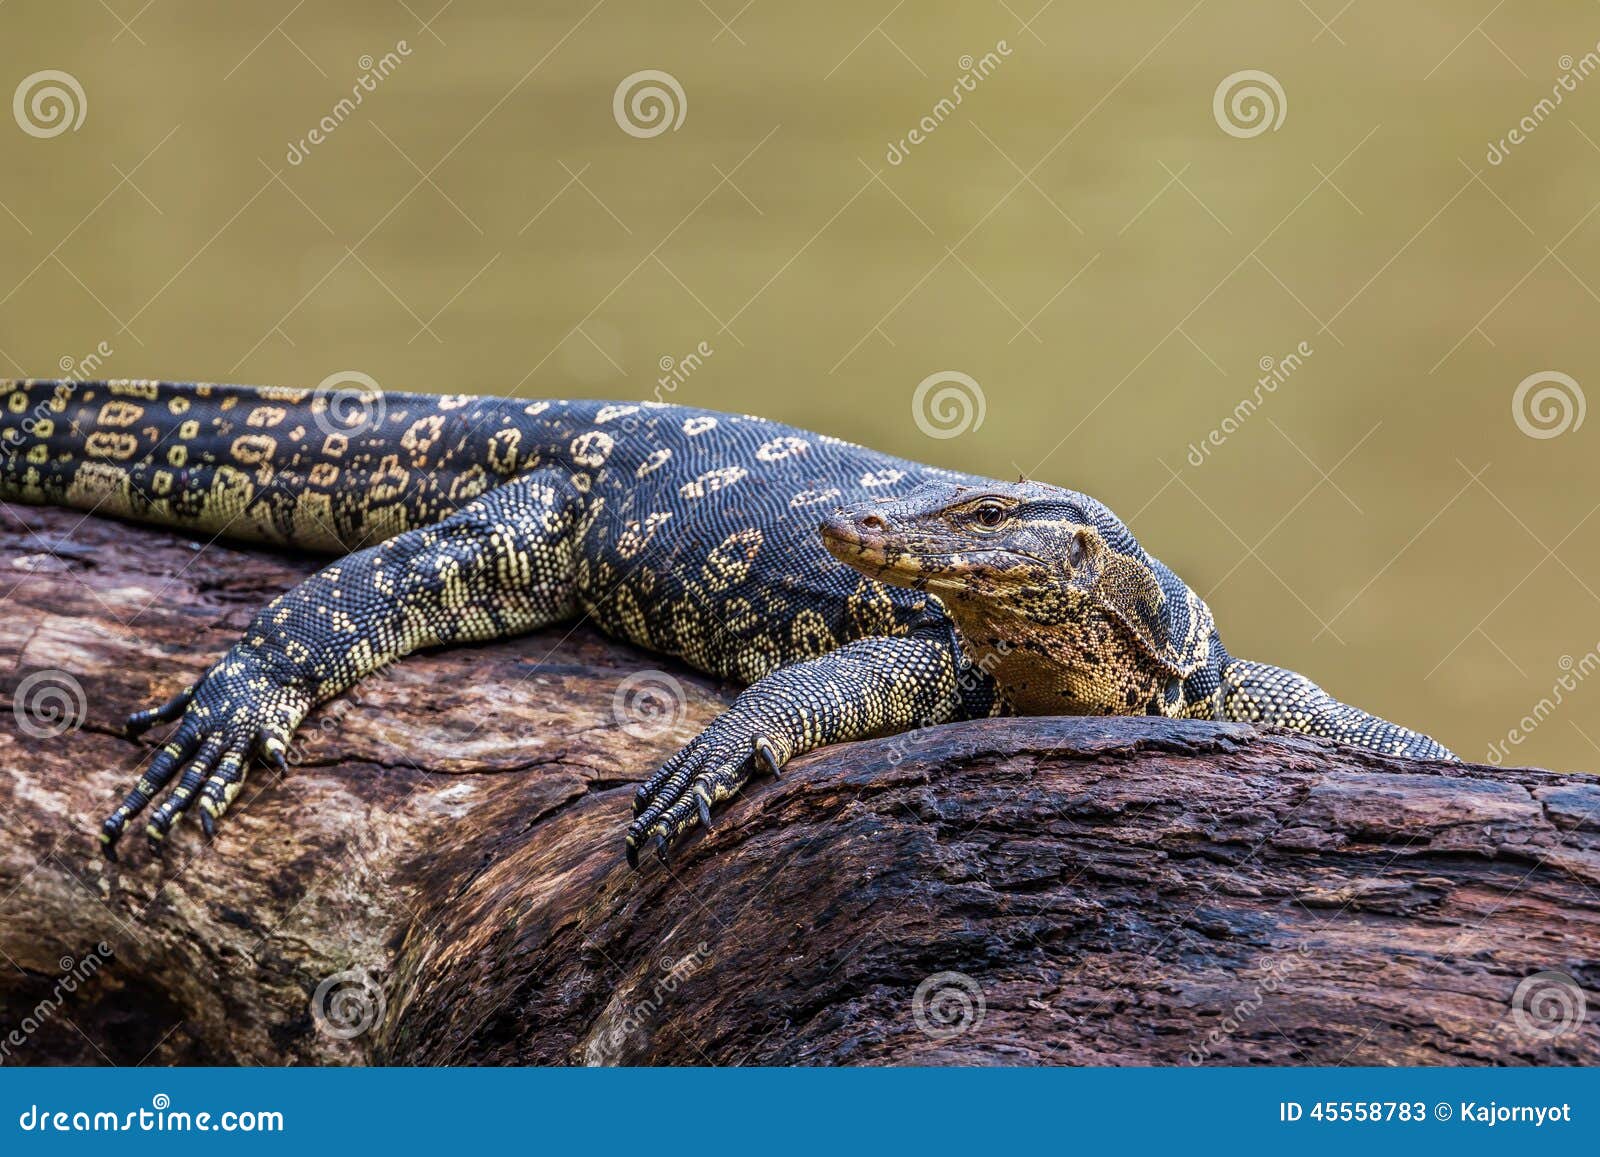 monitor lizards(varanus varius)